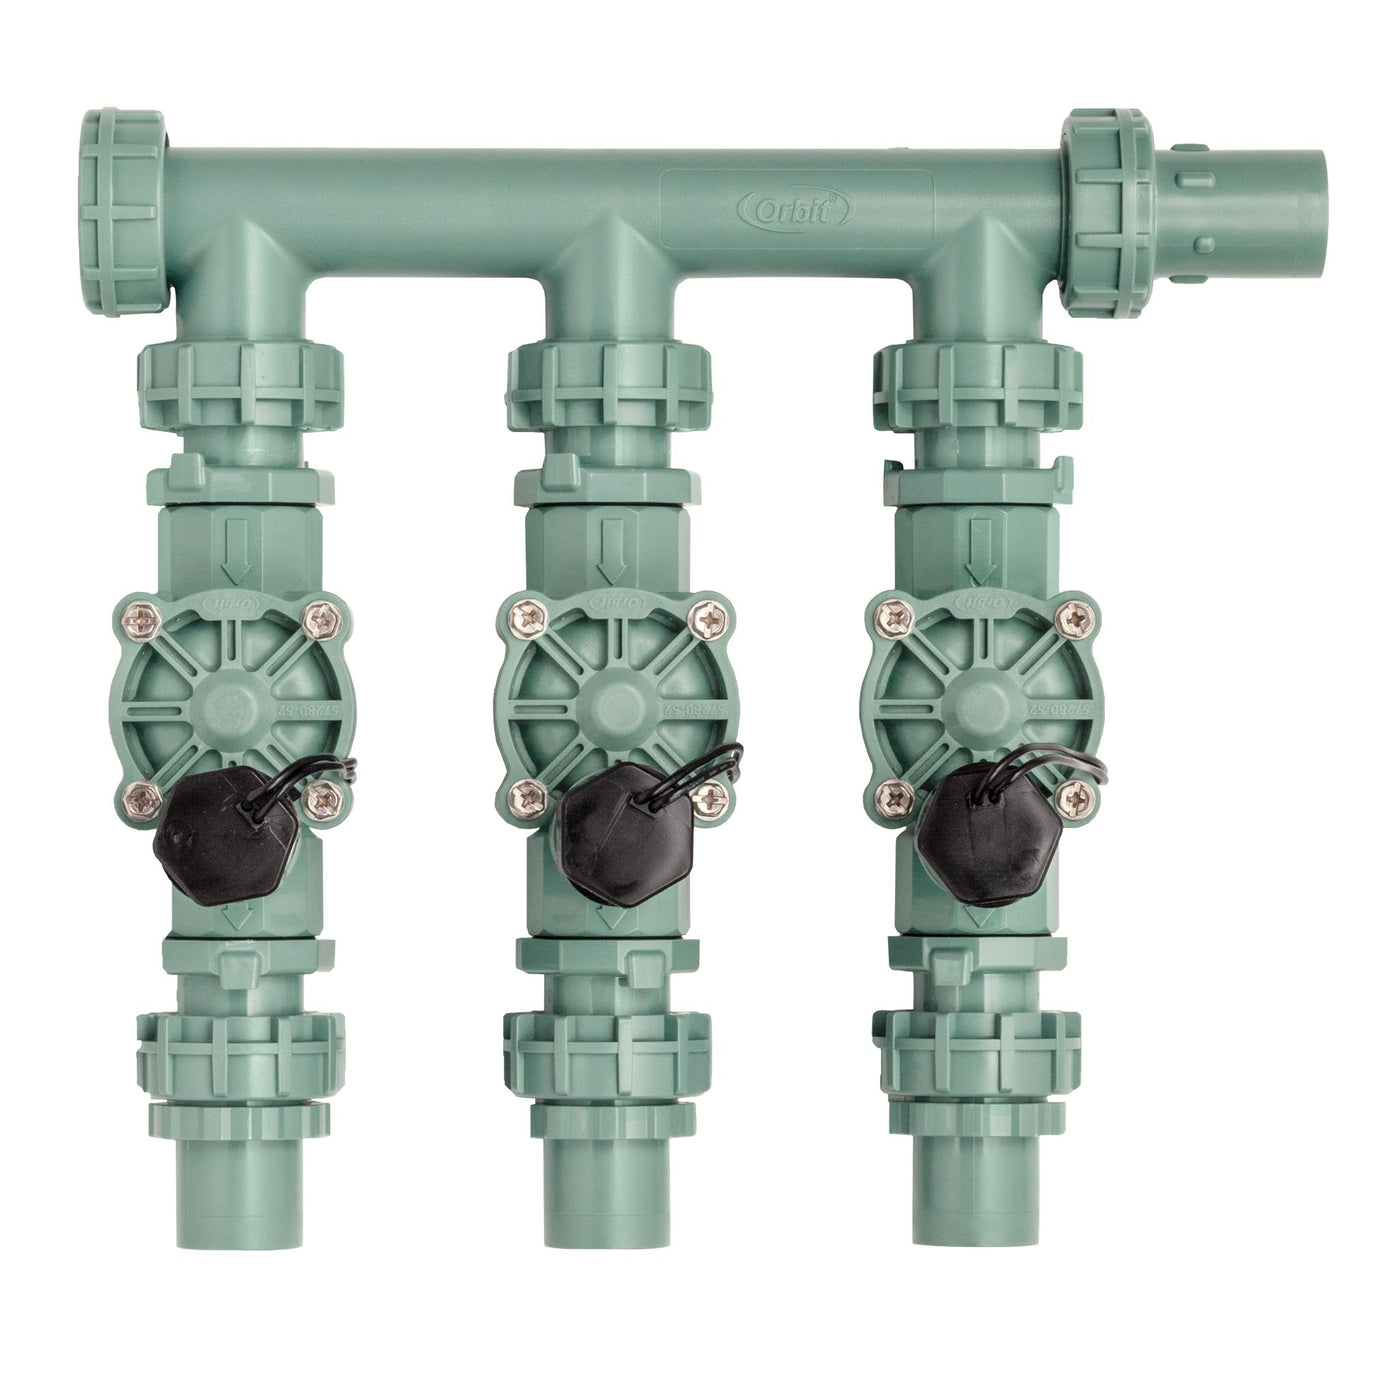 Part# 57253 - Sprinkler valve manifold - (3-valve)